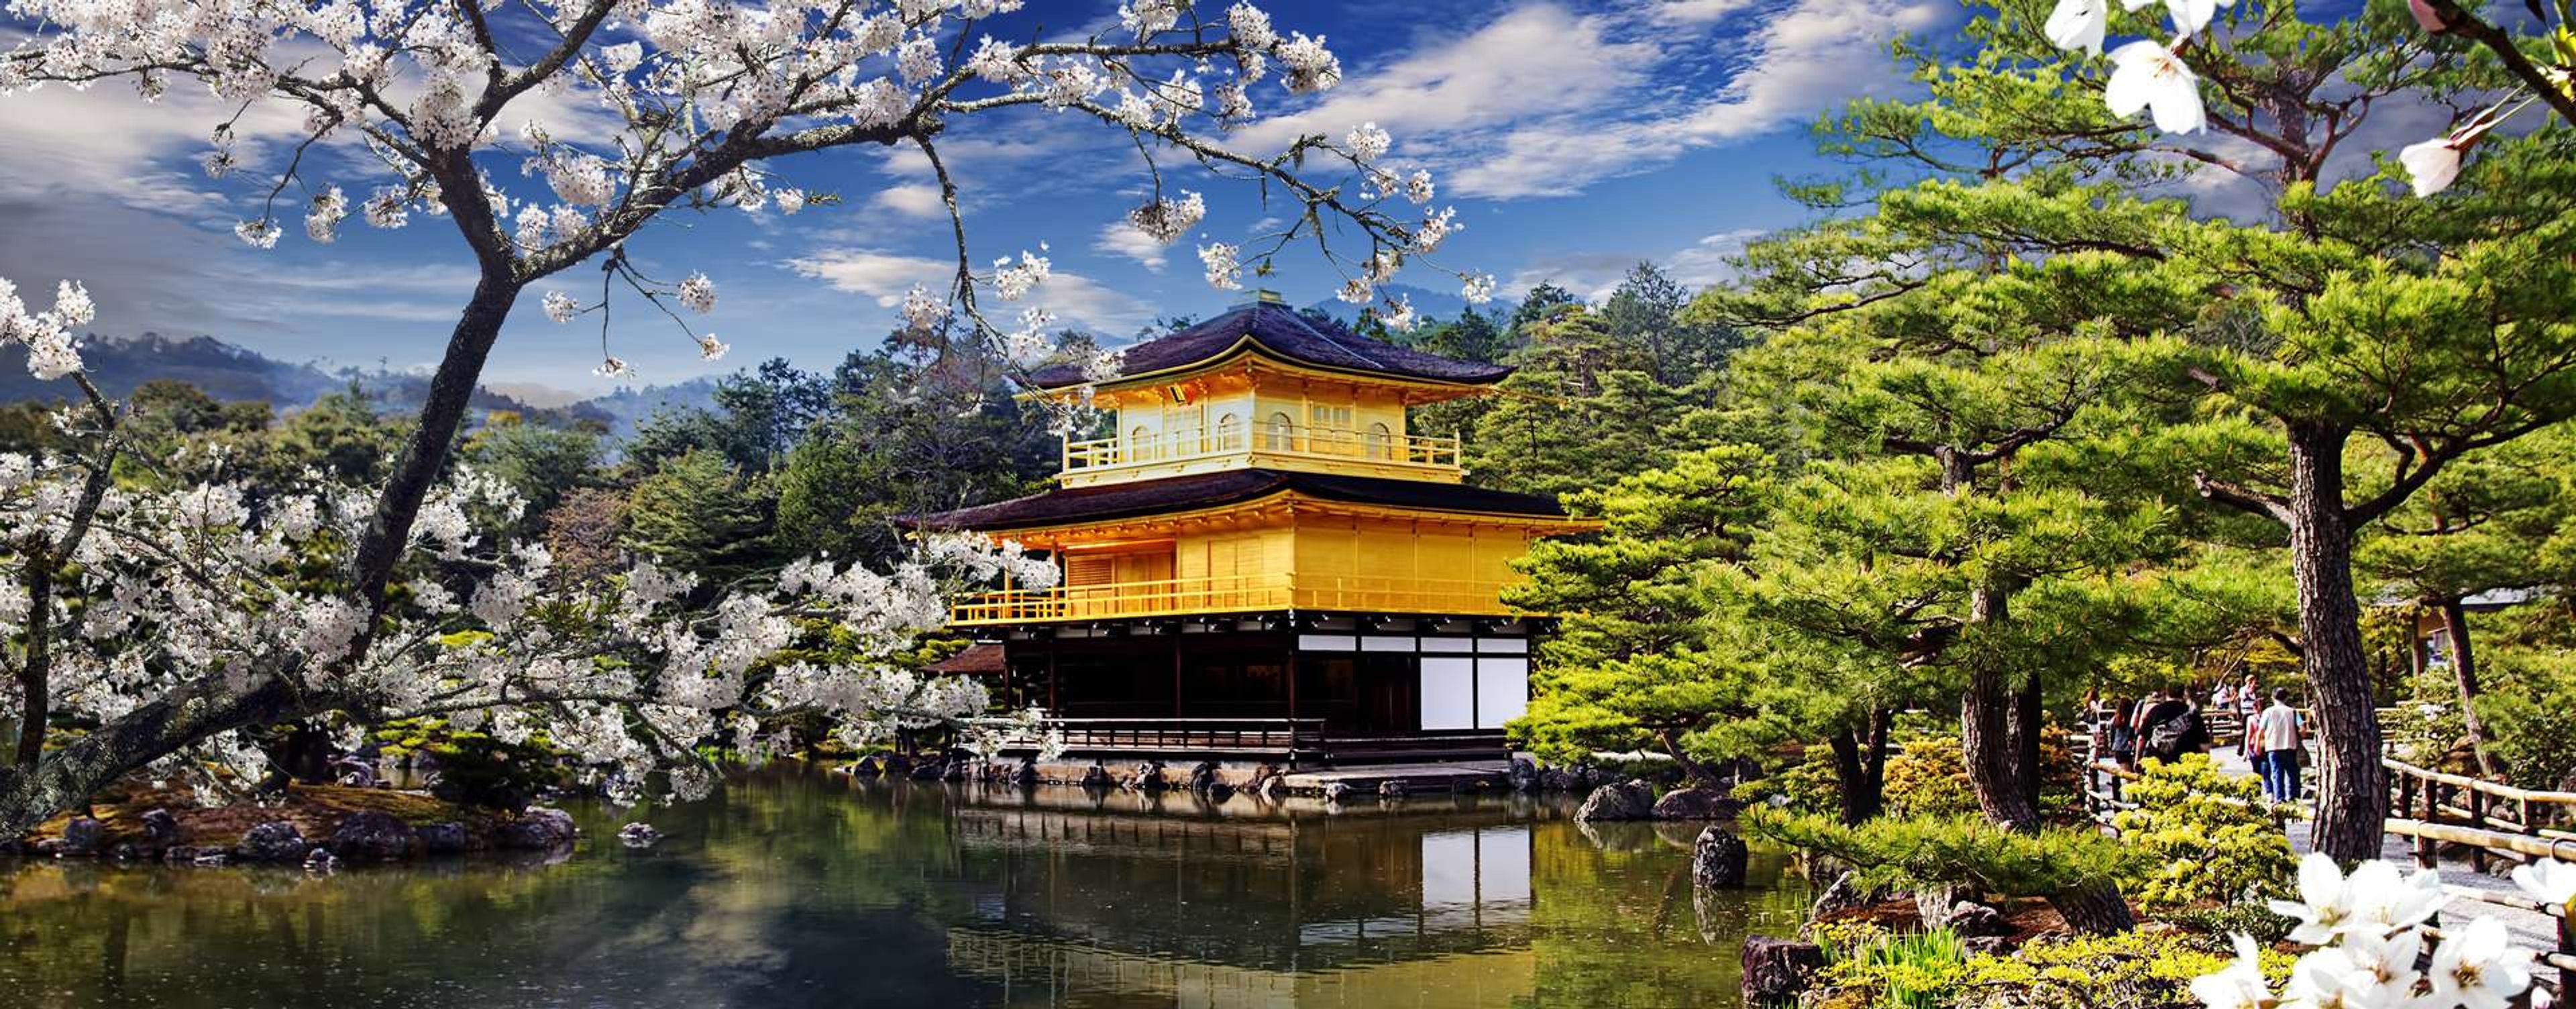 SJA   Japan   Kyoto   Gouden Tempel   Sakura   shutterstock 136606331